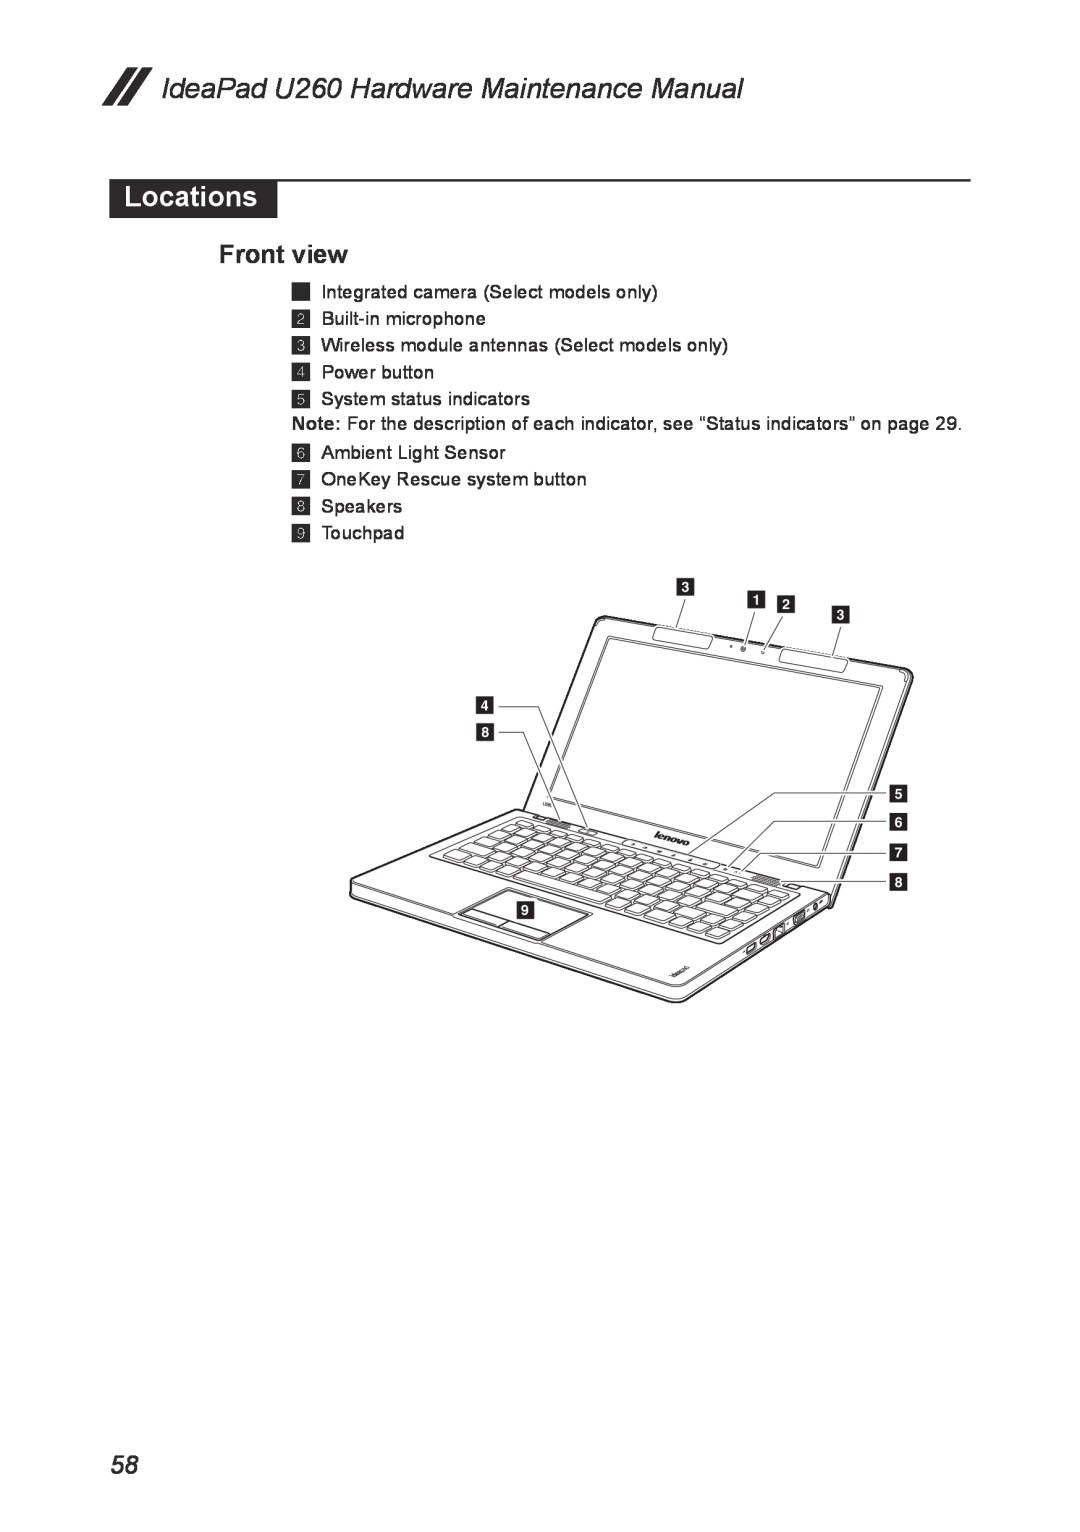 Lenovo manual Locations, Front view, IdeaPad U260 Hardware Maintenance Manual 